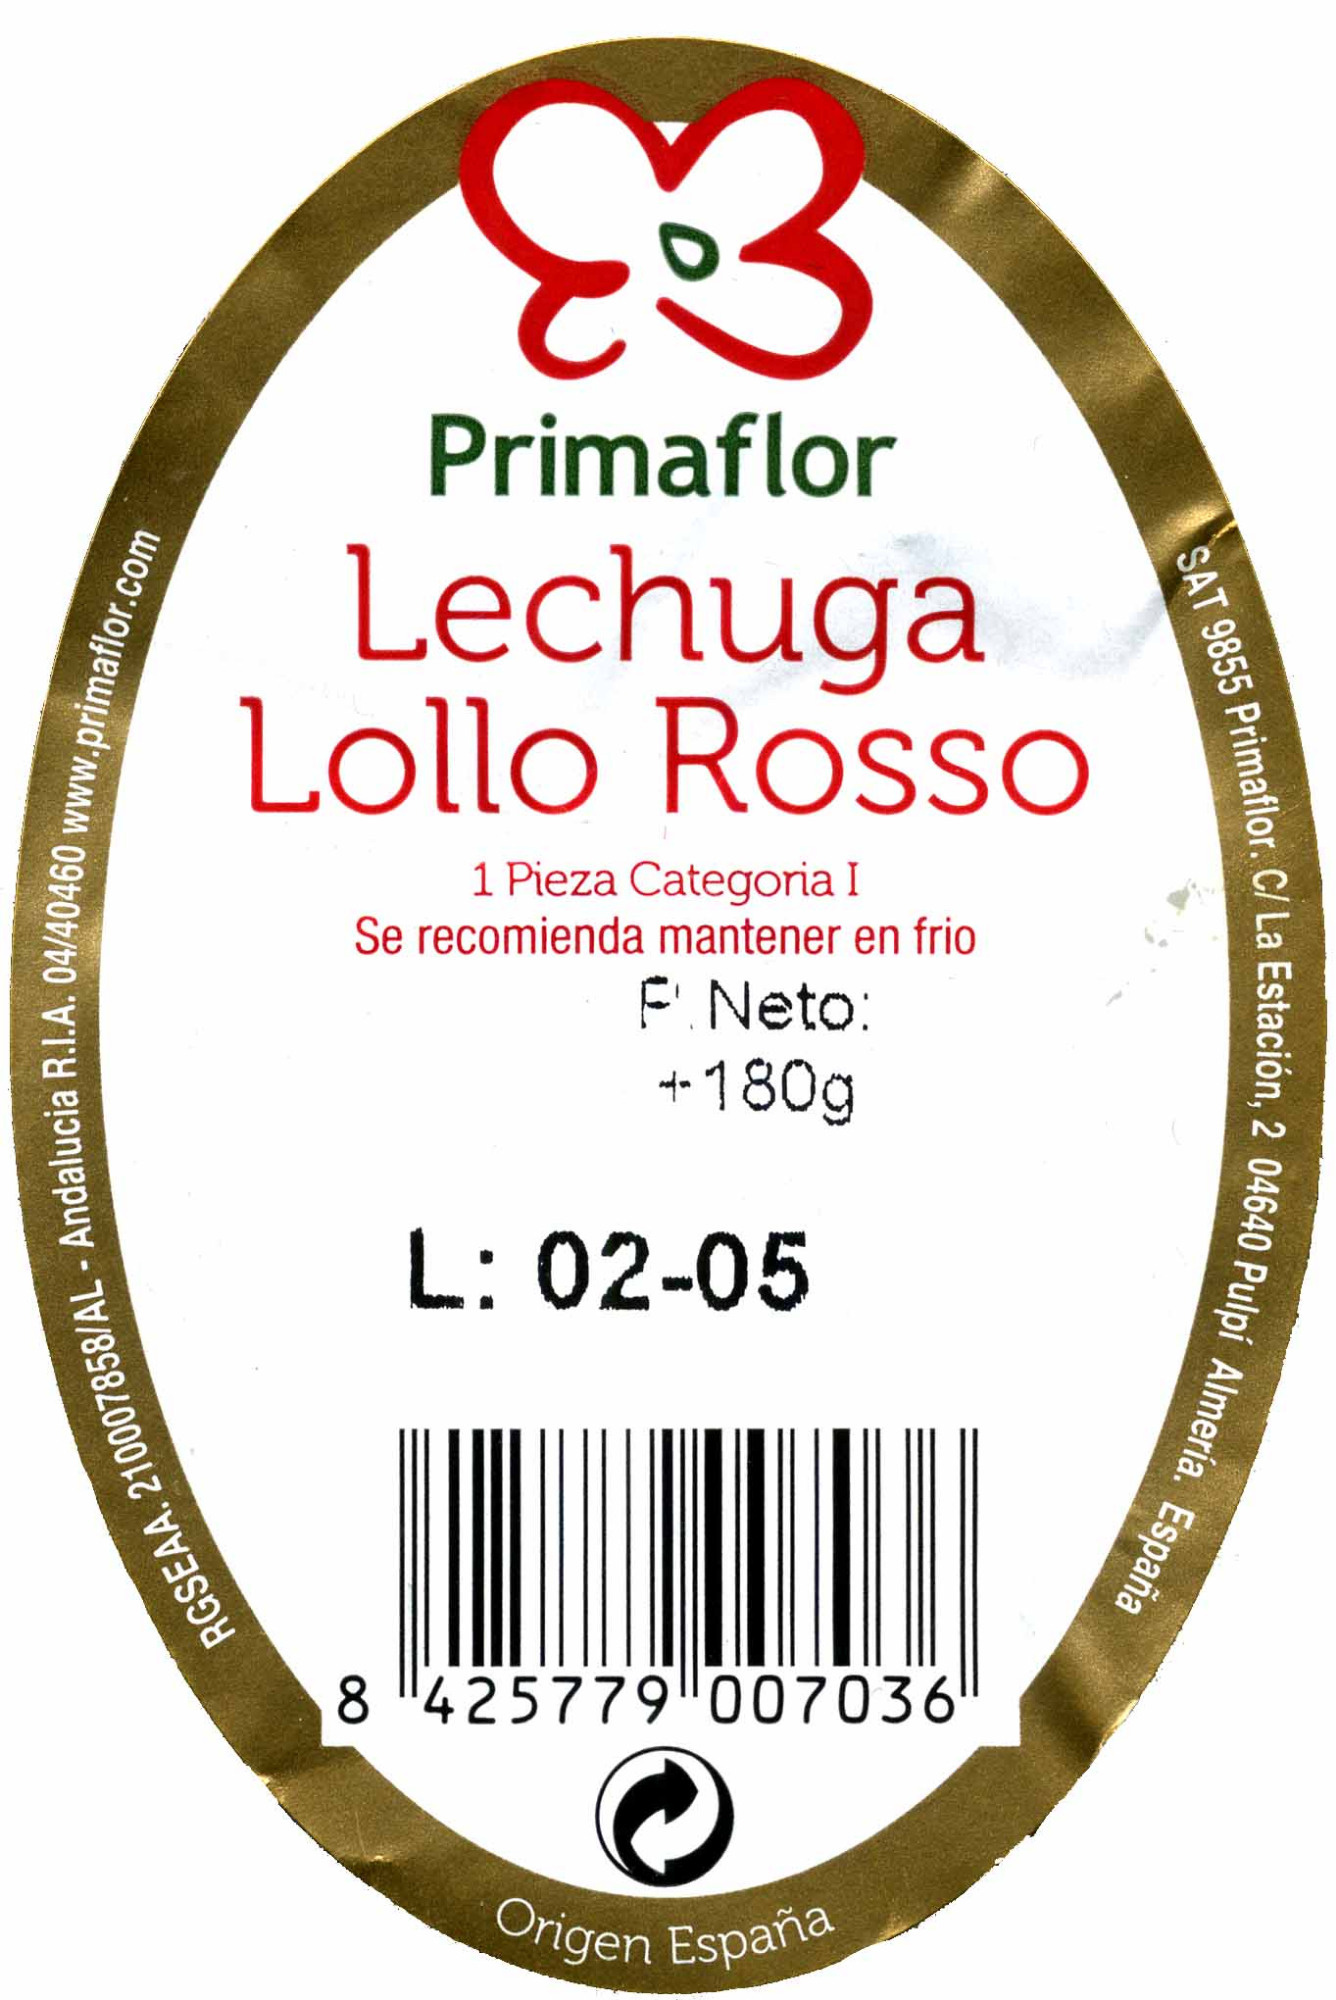 Lechuga Lollo rosso - Osagaiak - es